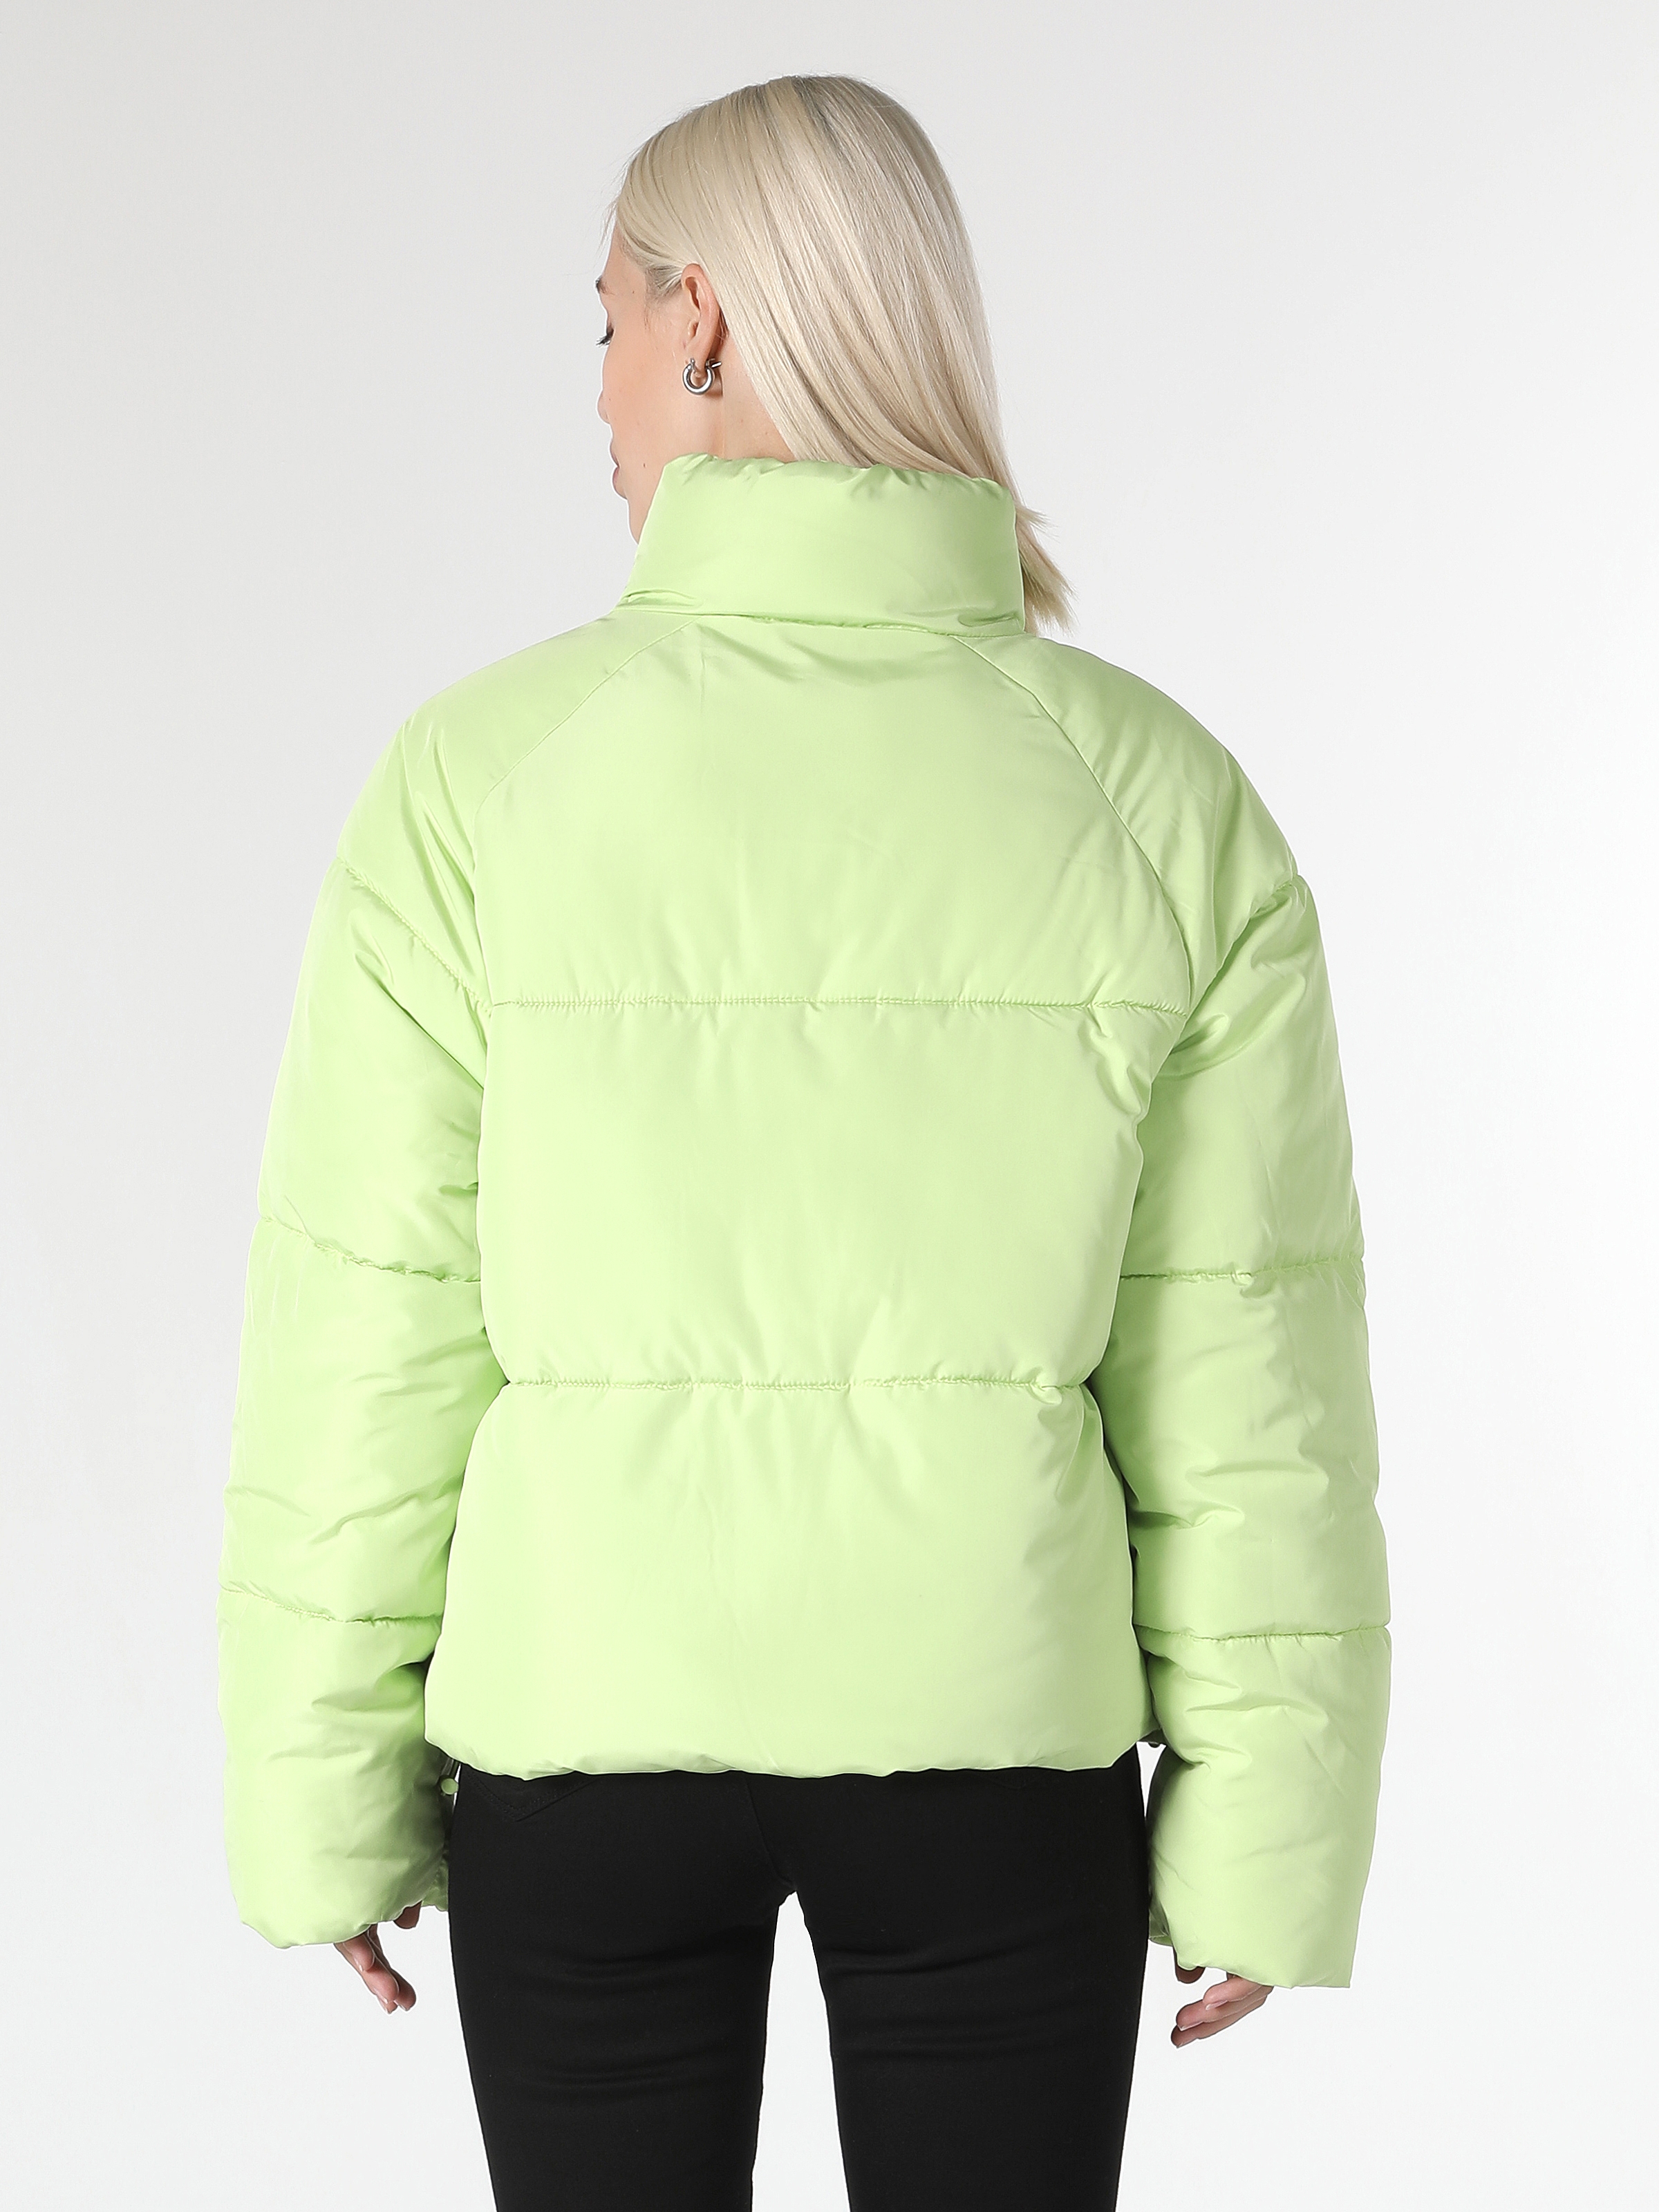 Afficher les détails de Manteau Femme Vert Puffer Coupe Regular